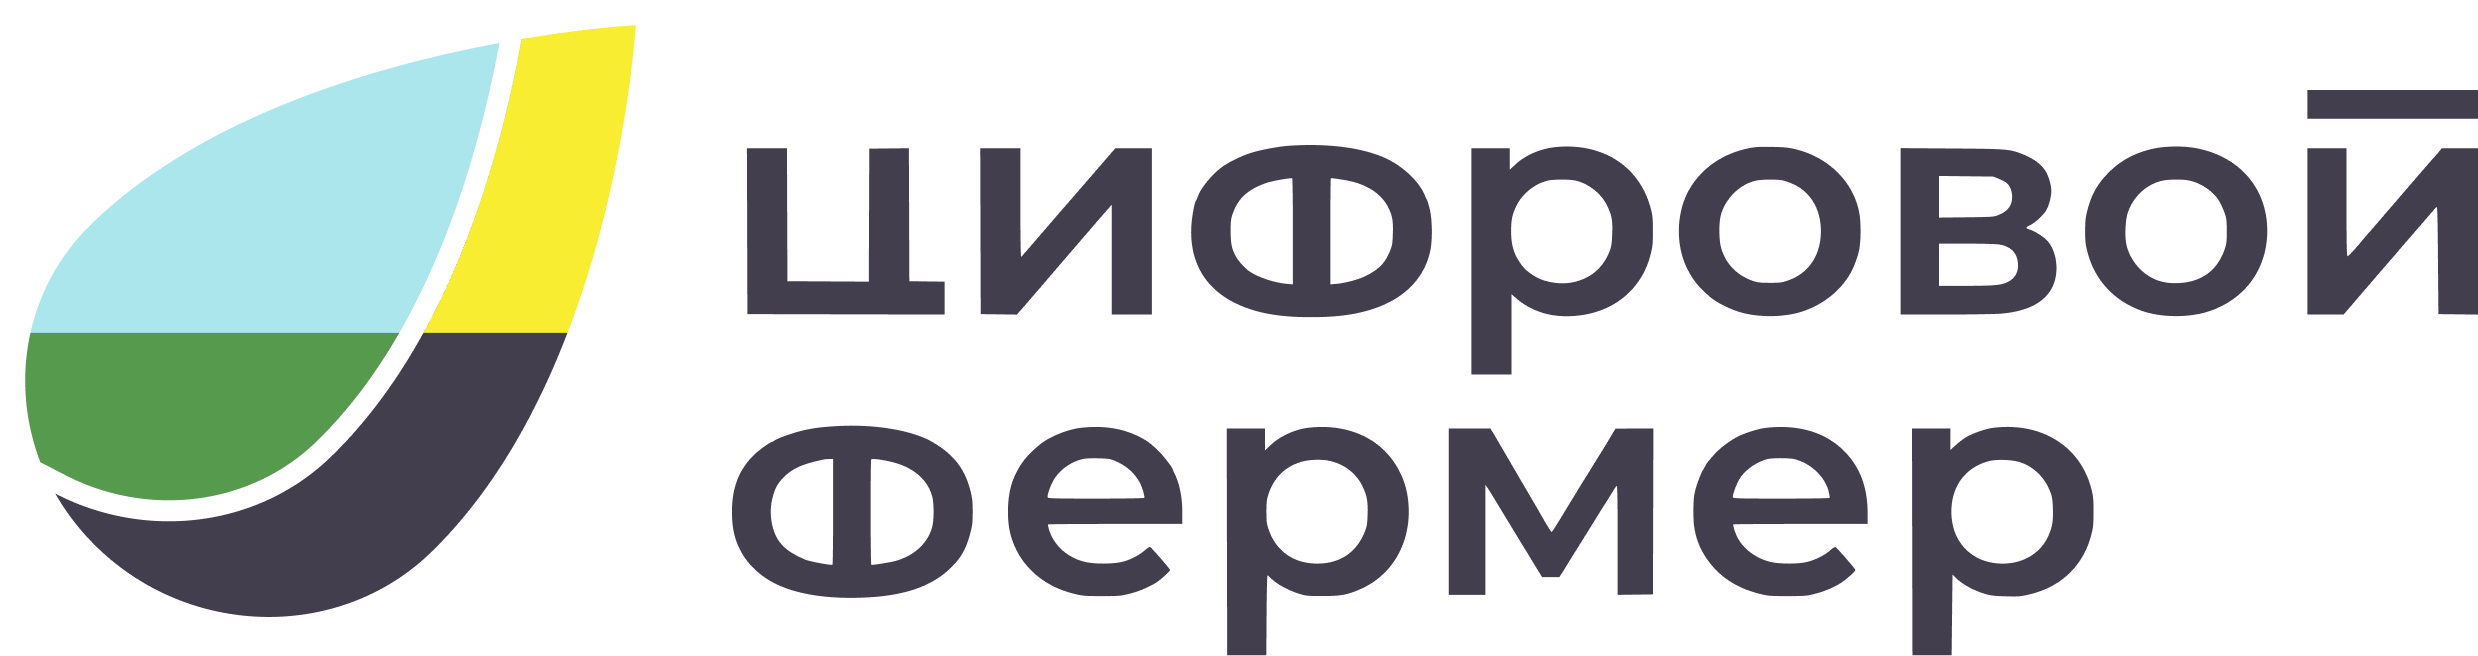 ООО "Русагро-Закупки" - Город Саратов logo.c2fa21a 2.png